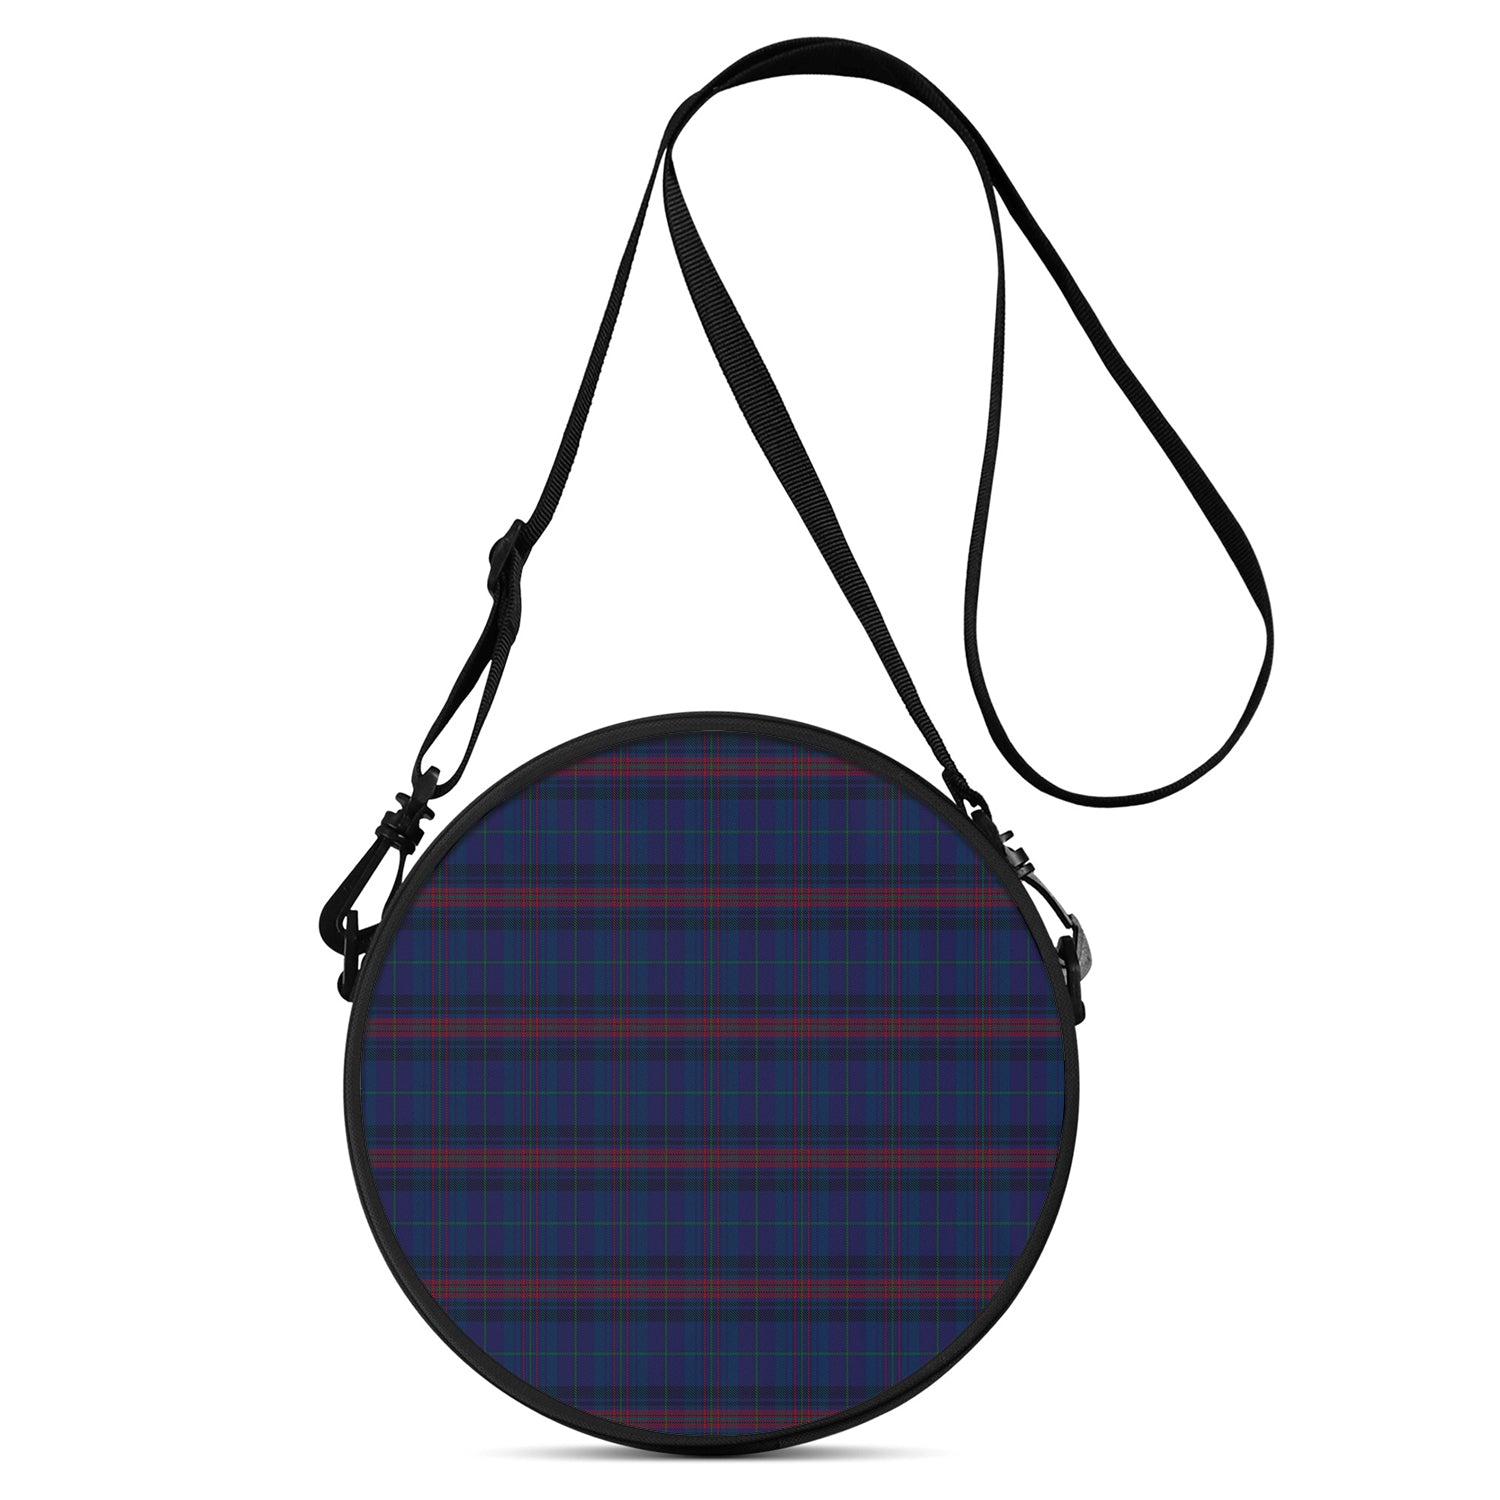 hughes-of-wales-tartan-round-satchel-bags